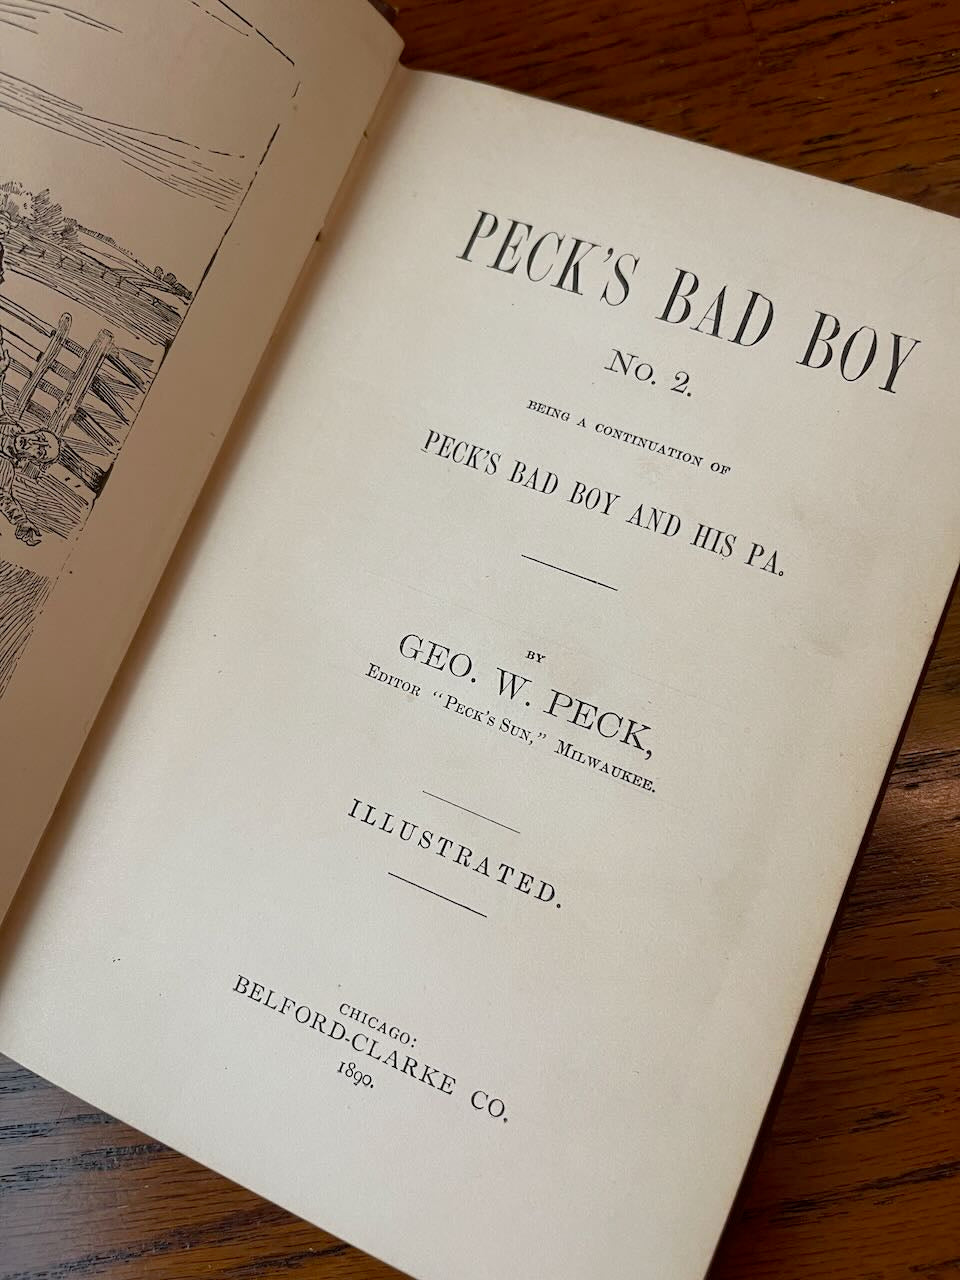 Peck's / Bad Boy and his Pa. Parts 1 & 2 / Boss Book / ca. 1890 - Precious Cache